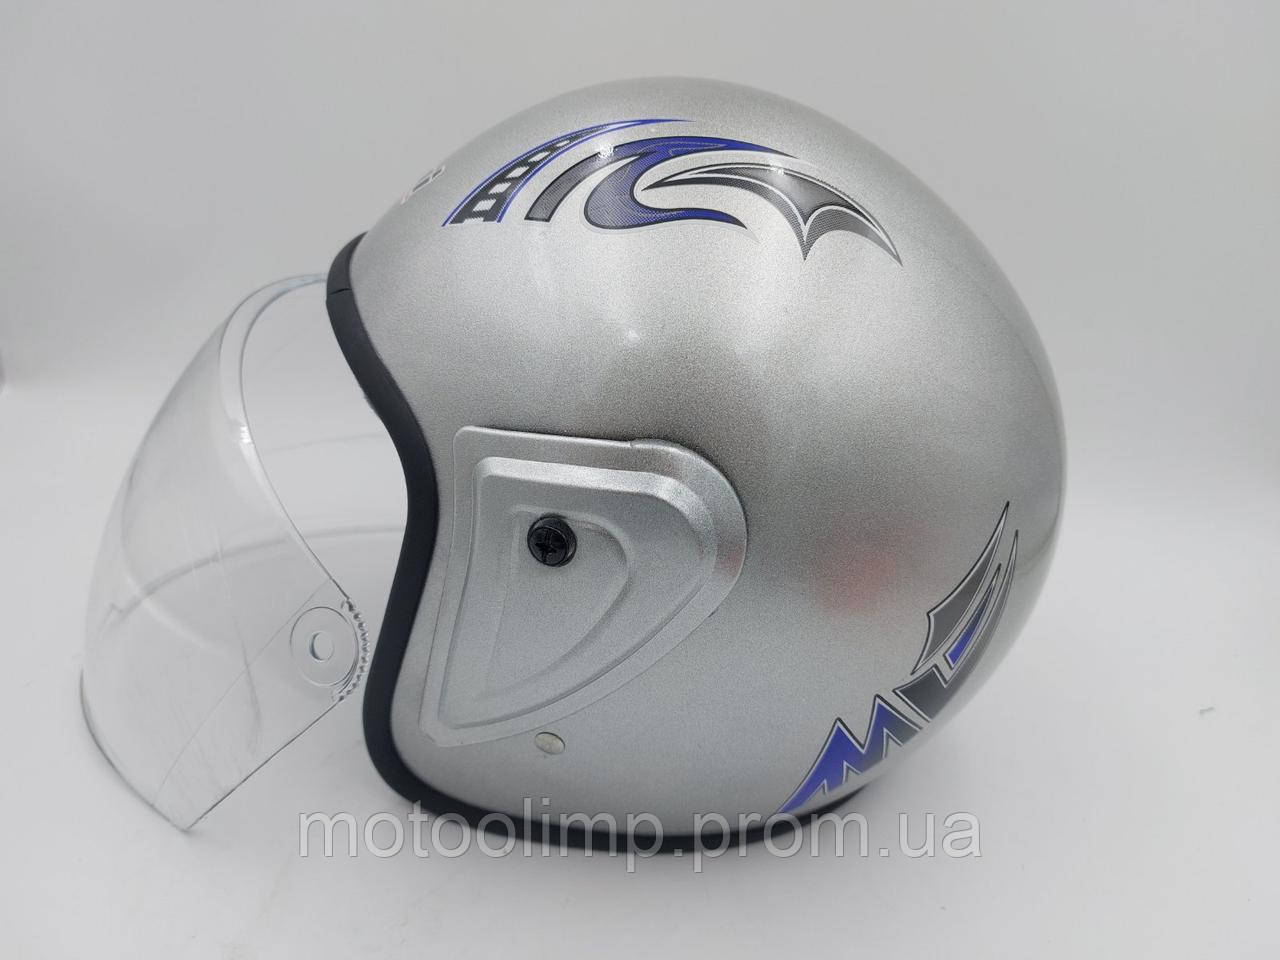 Мото шлем открытый для скутера и мотоцикла р.M-L (57-59см), летний  Срібло